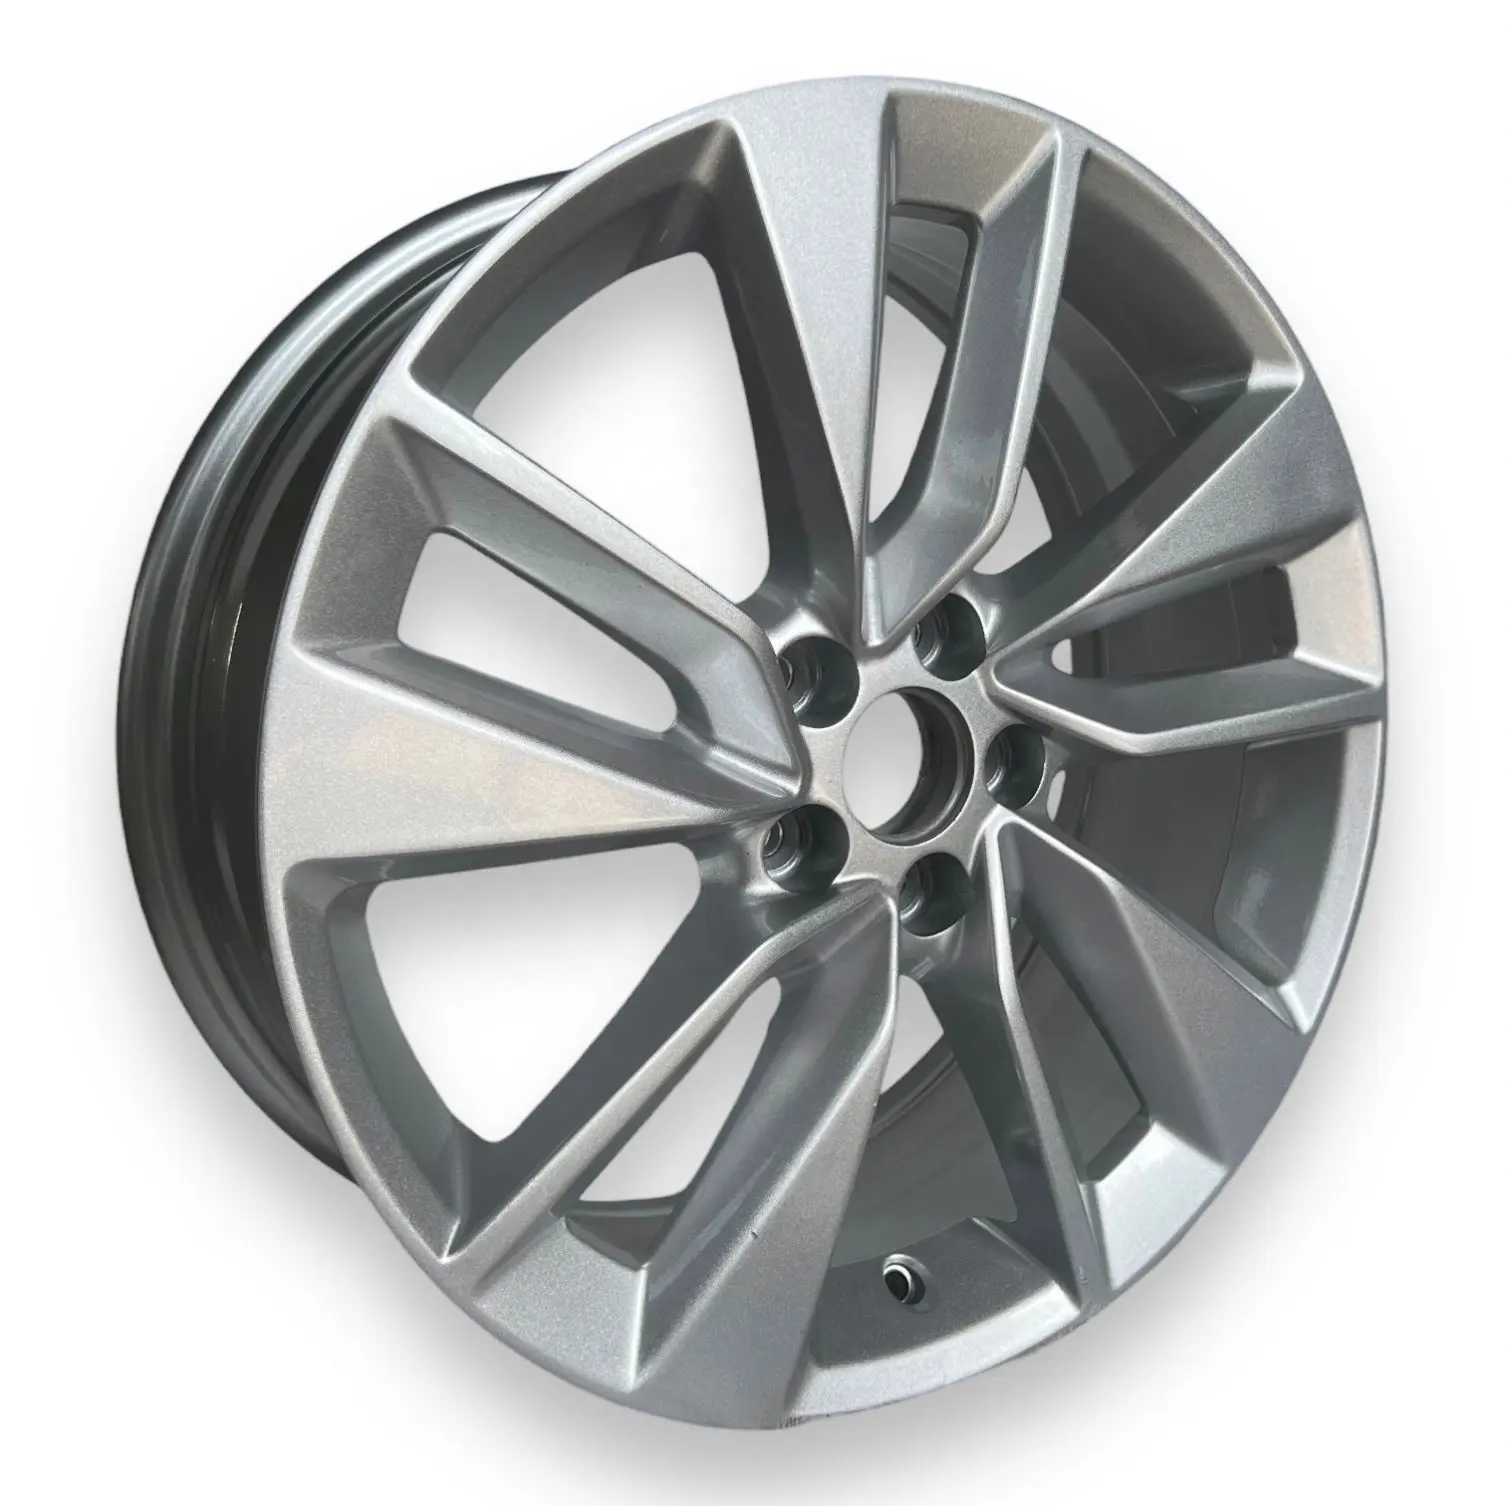 Flrocky Brand wheel manufacturer 5 HOLE tires rims PCD 100 for Volkswagen Touareg Automobile Casting Rim